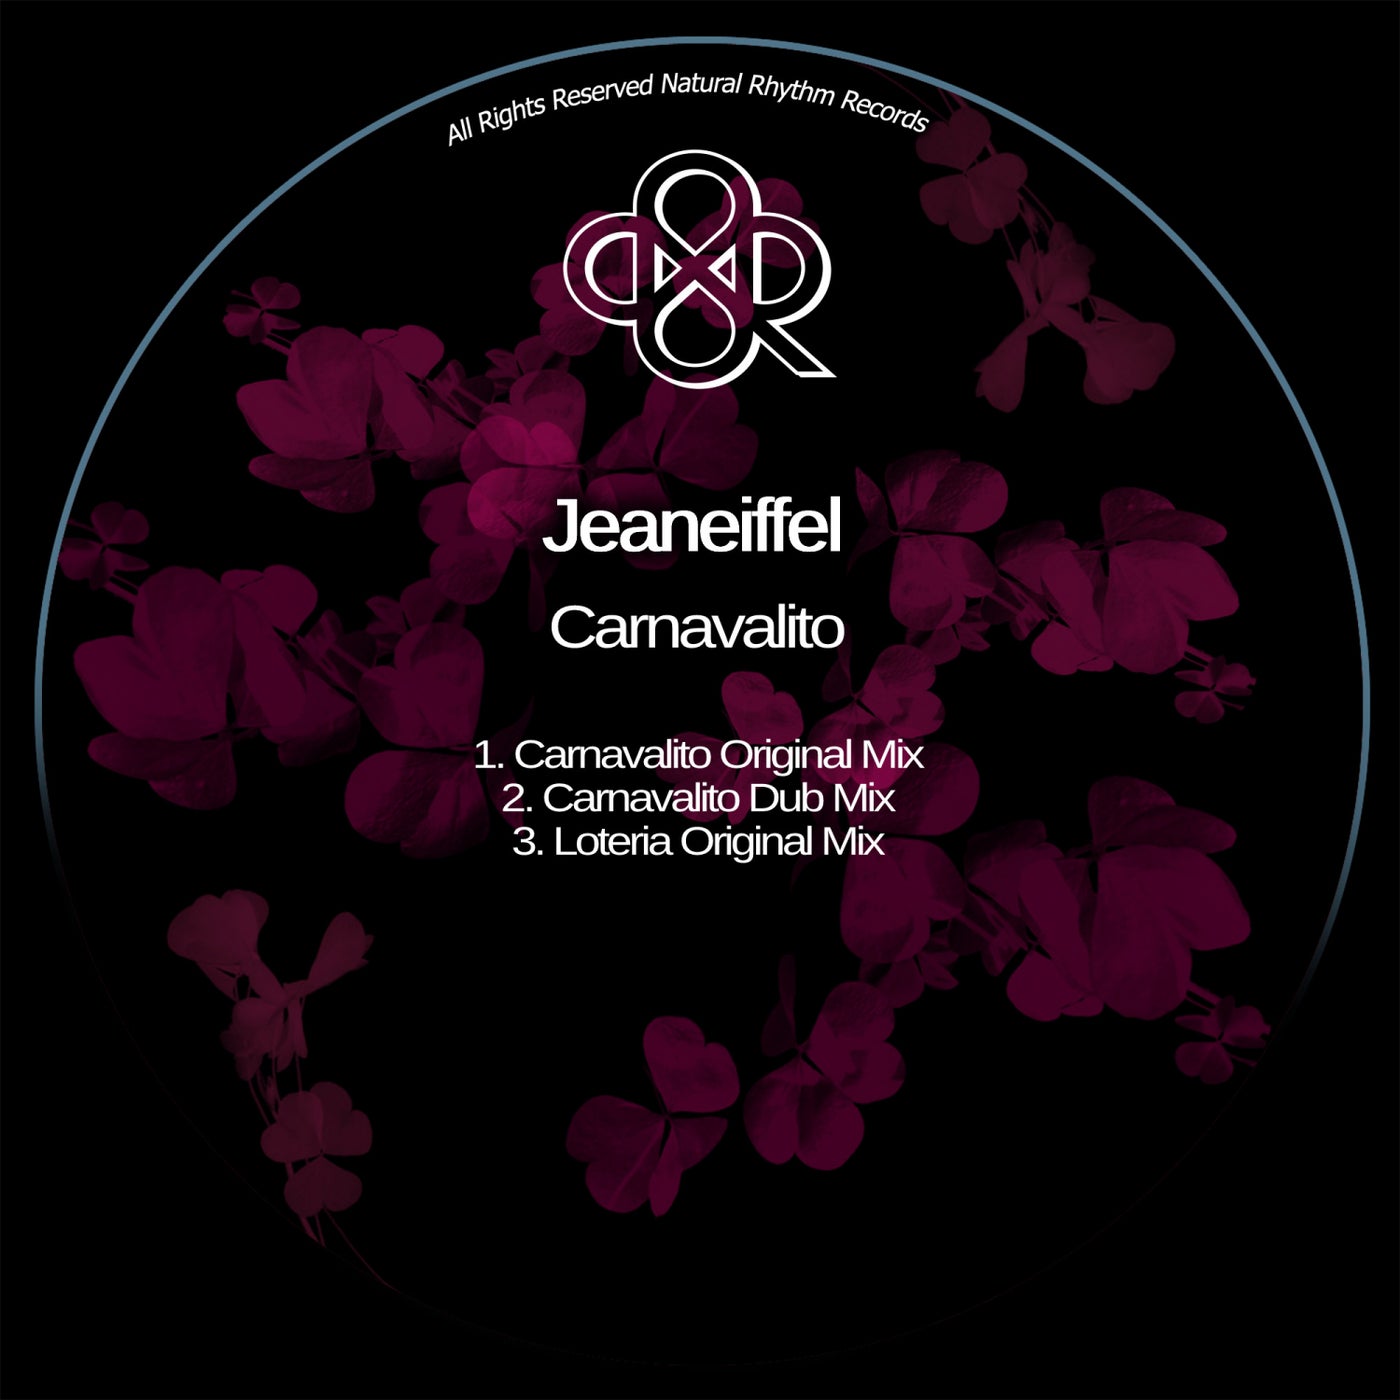 jeaneiffel – Carnavalito [NR392]